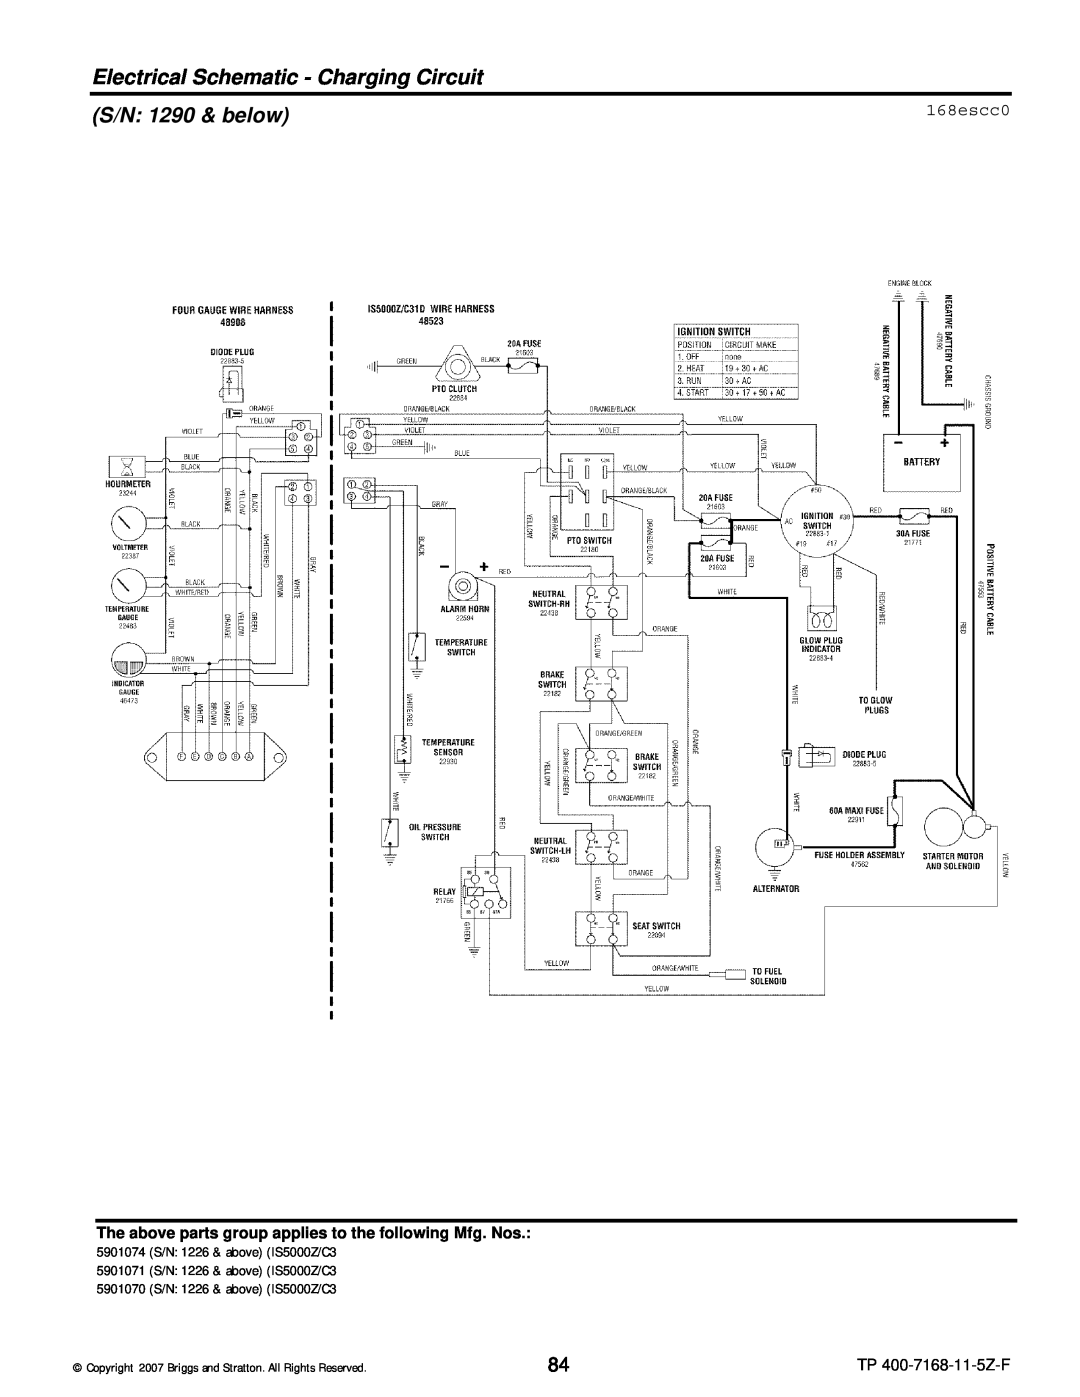 Briggs & Stratton 5900204 manual Electrical Schematic - Charging Circuit, S/N 1290 & below, 168escc0, TP 400-7168-11-5Z-F 